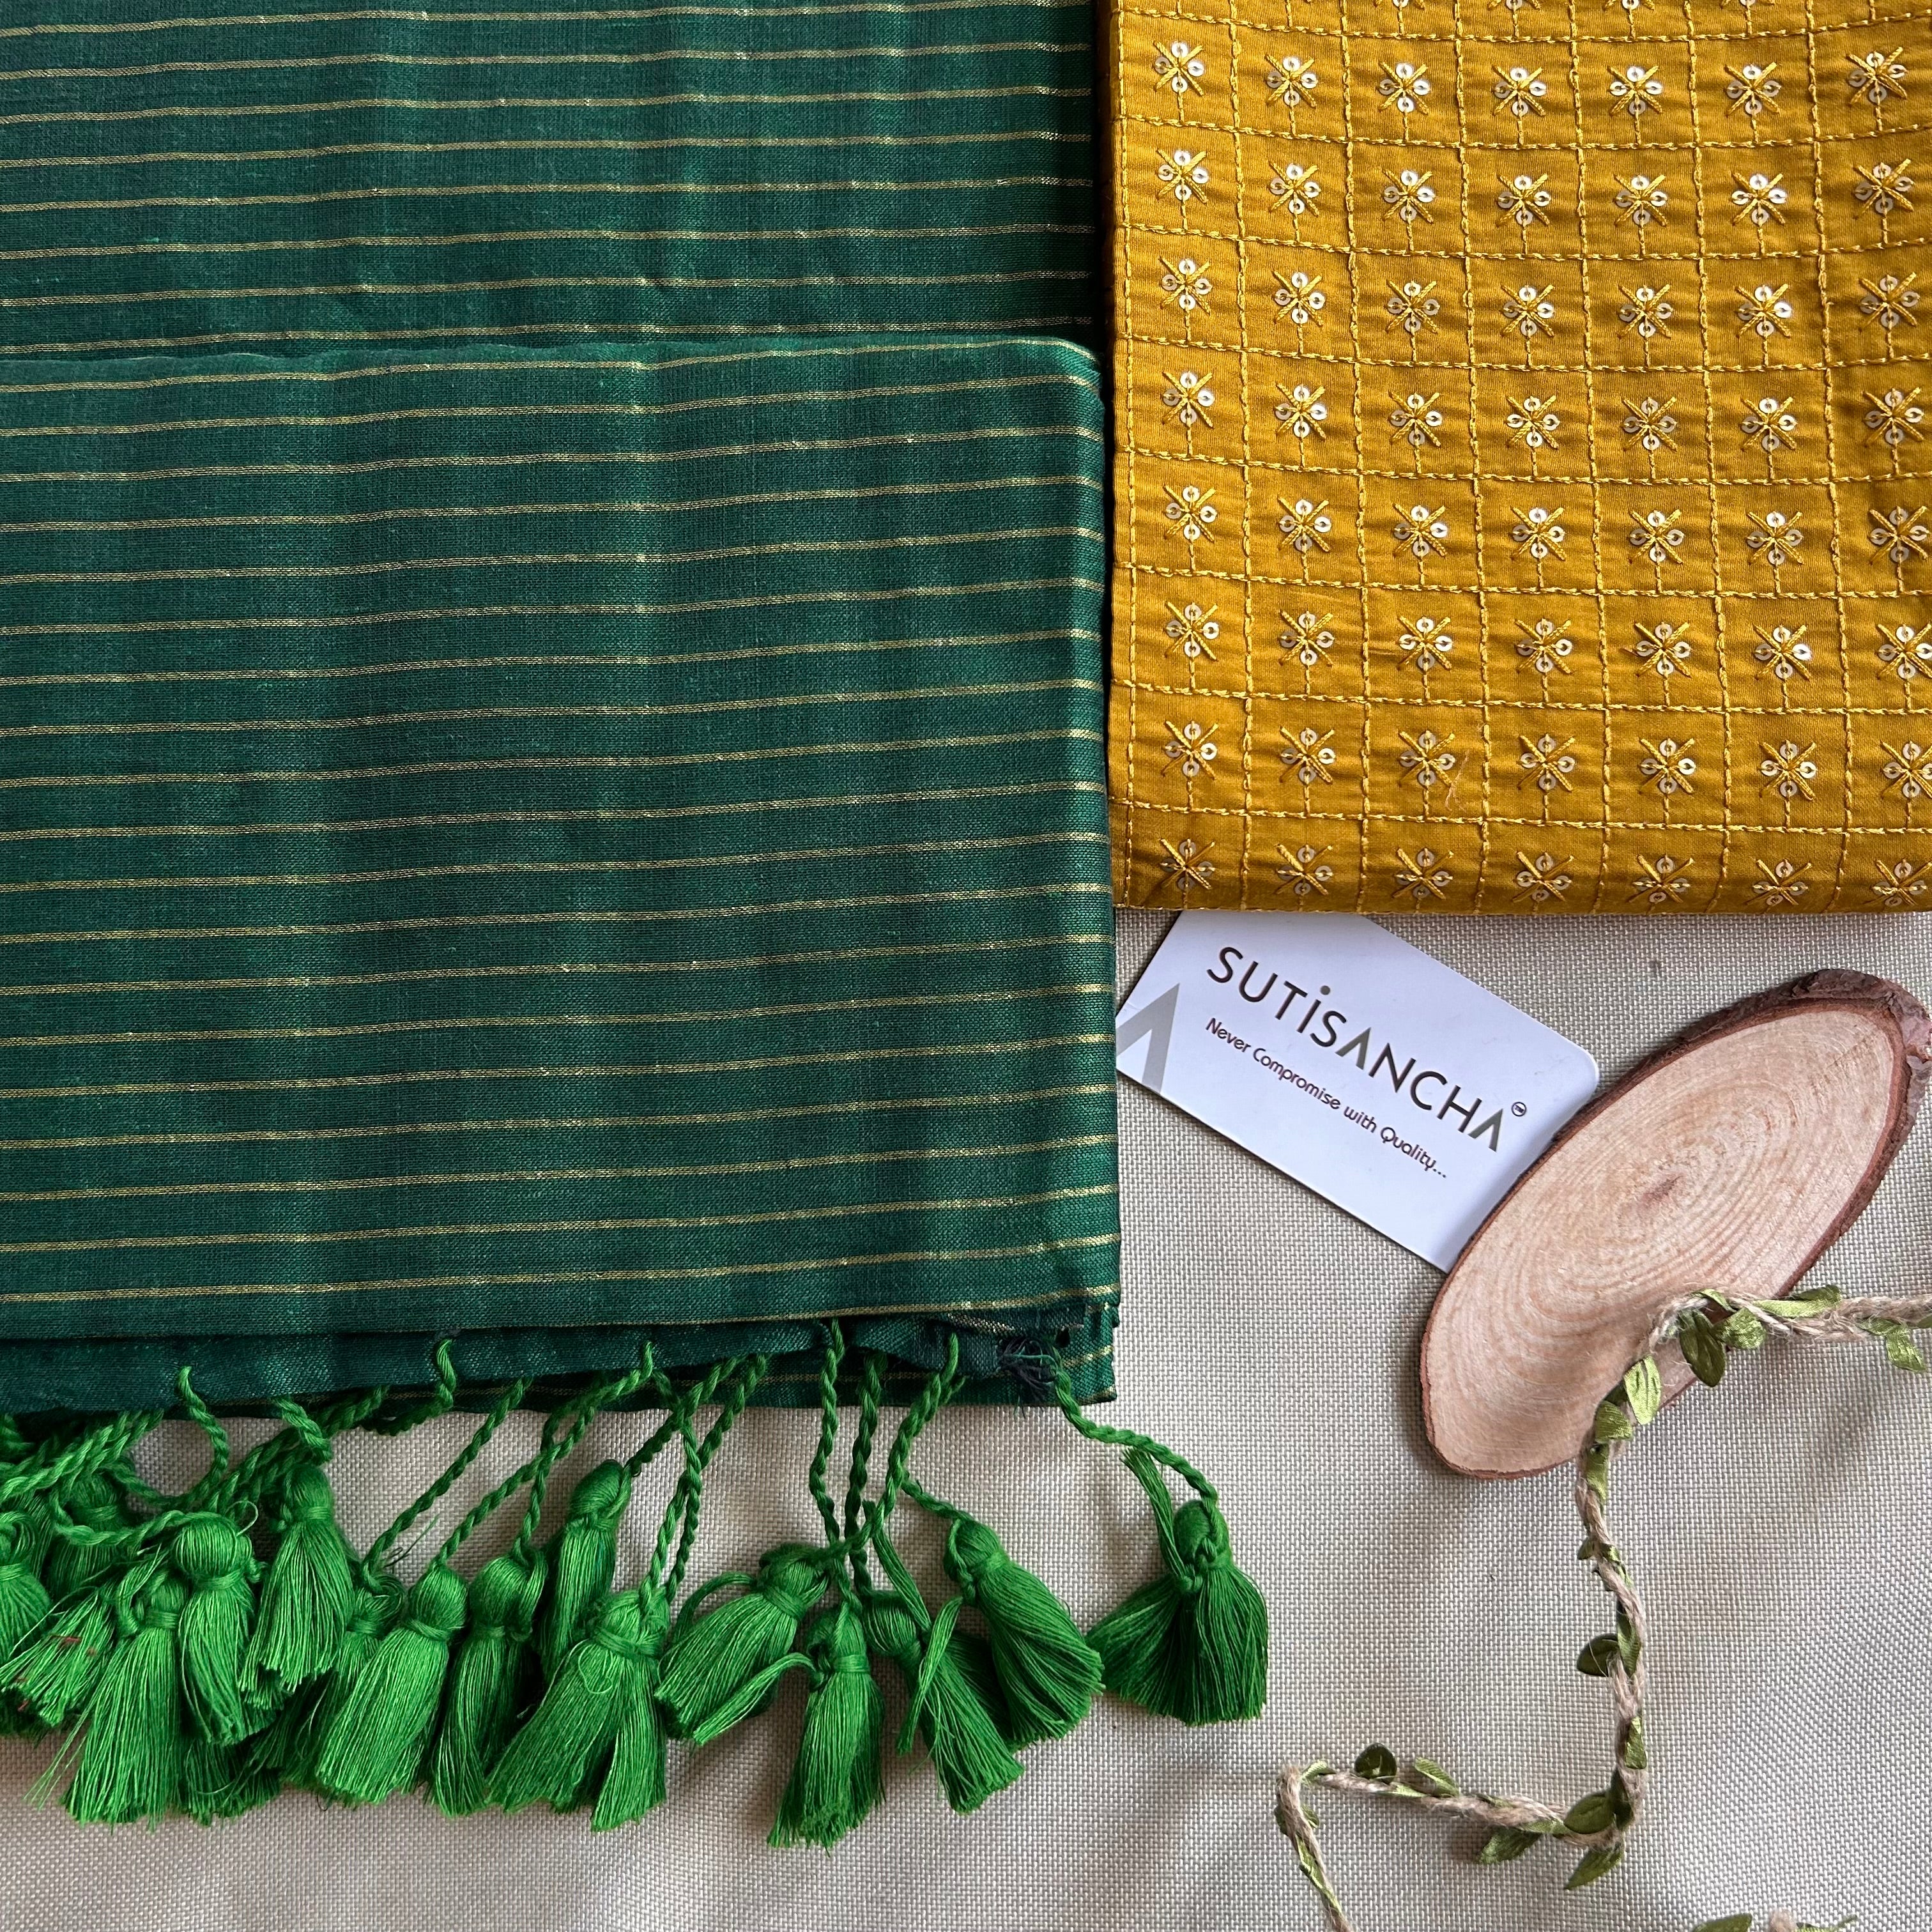 Sutisancha Green Stripe cotton Saree designer work Blouse